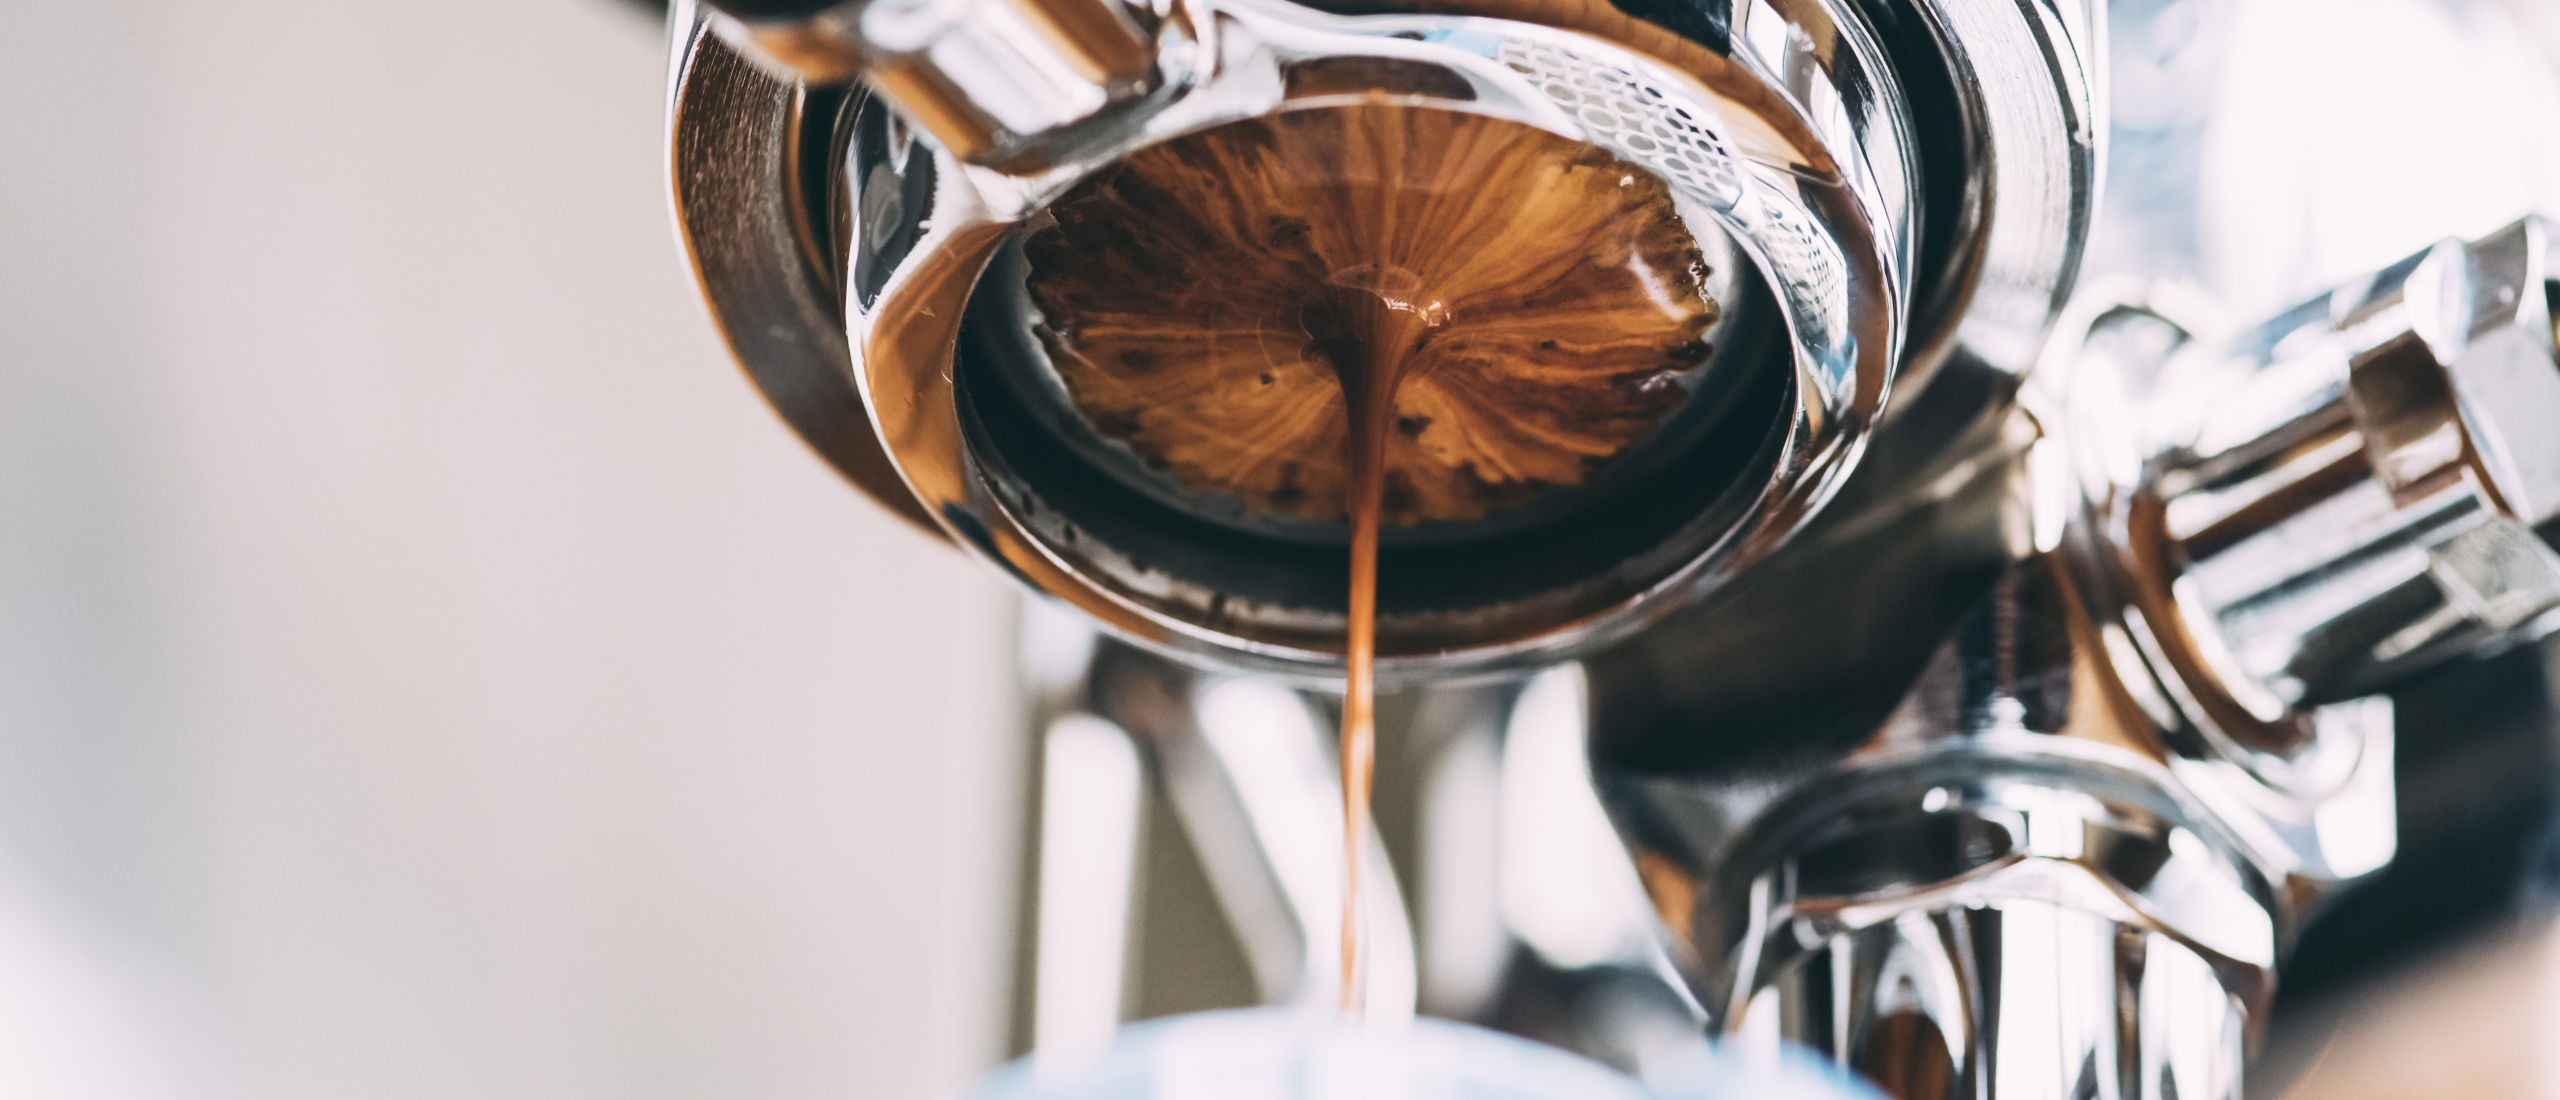 Cafeïnegehalte: hoeveel cafeïne zit in welk product?